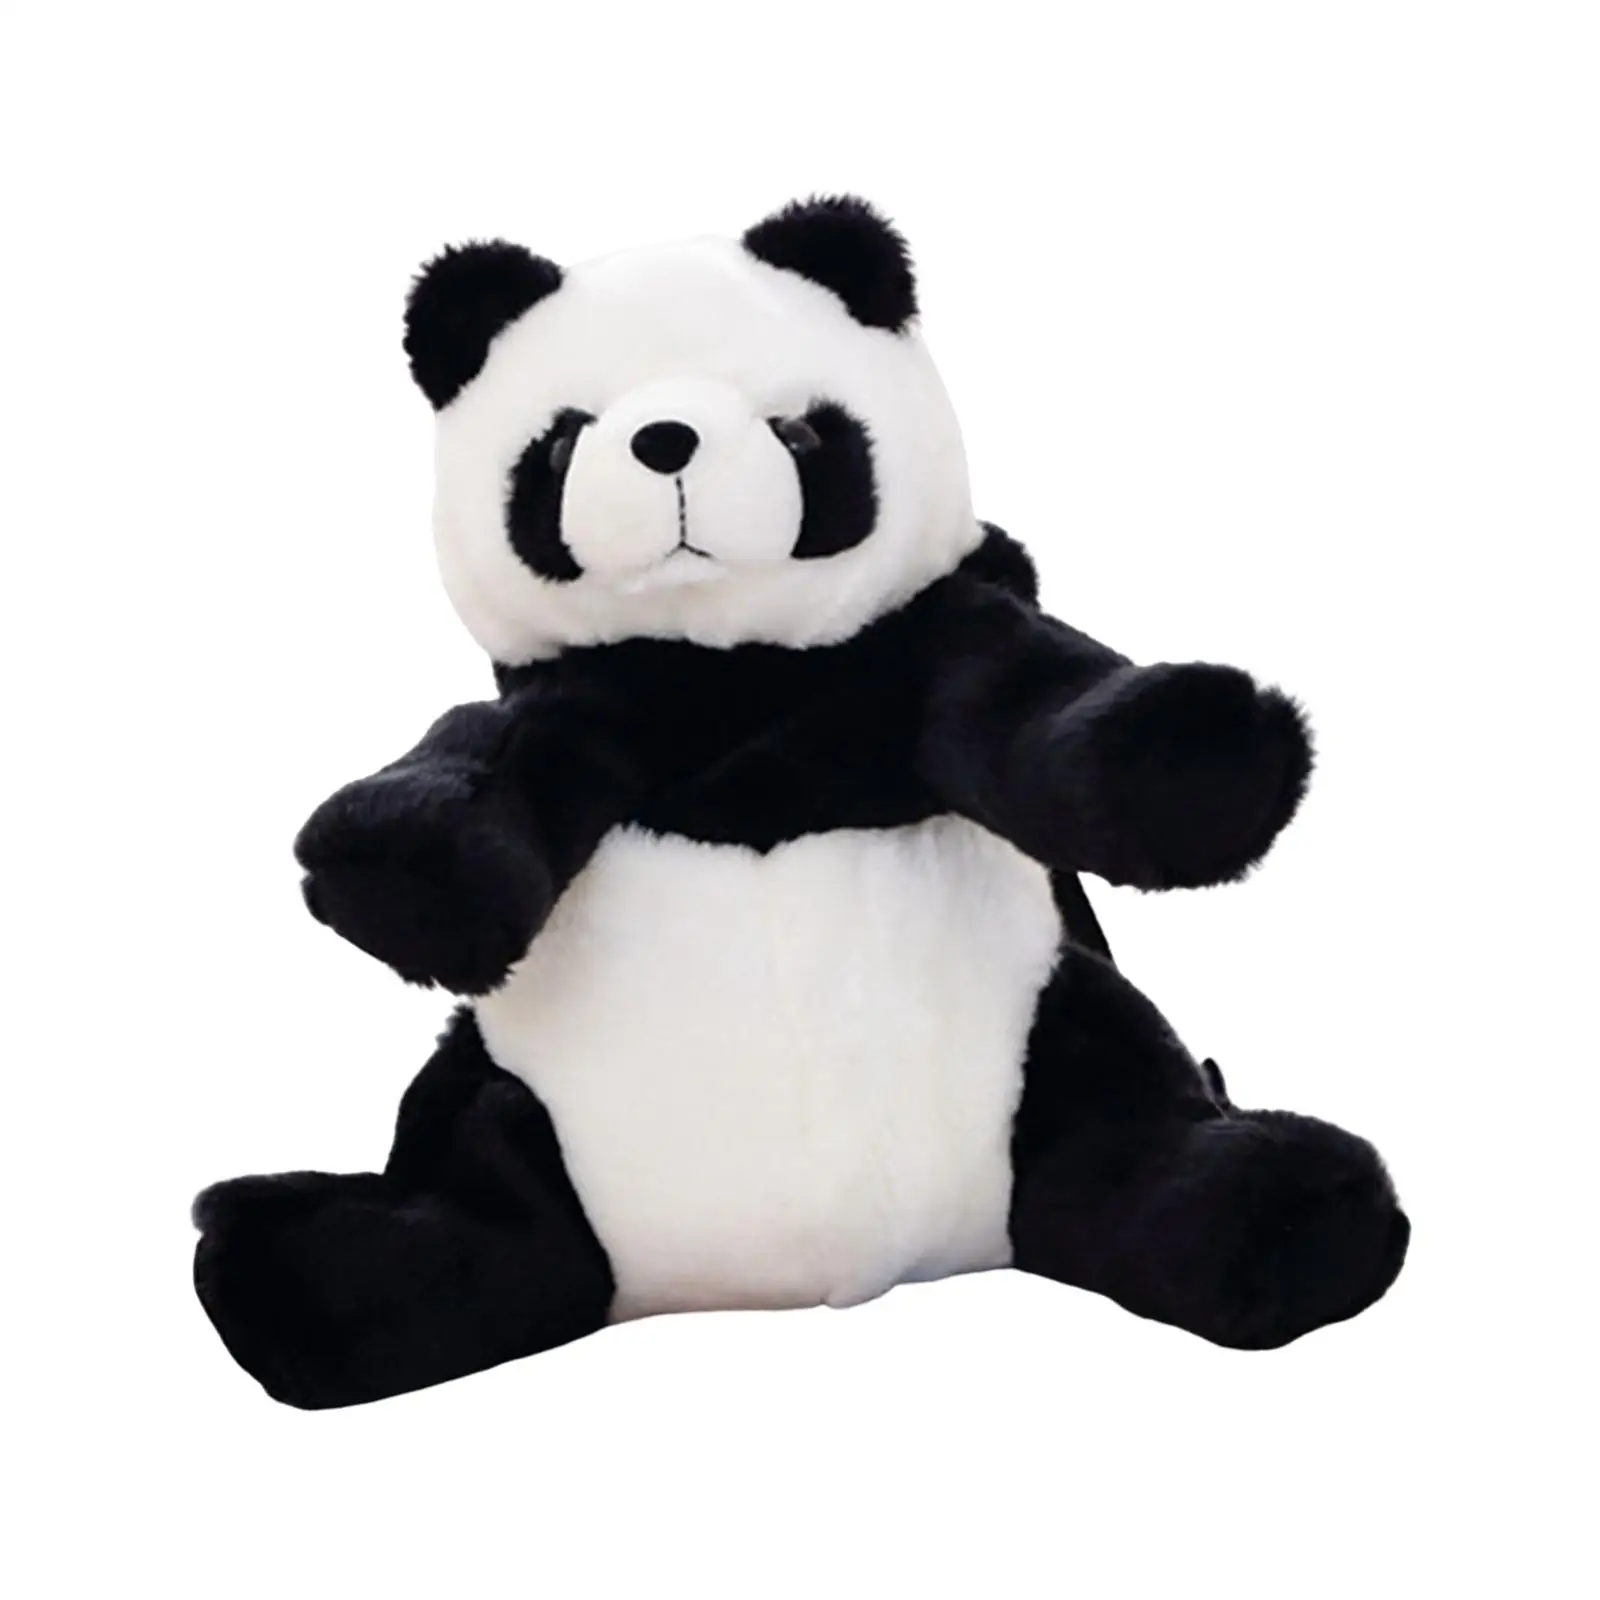 Plush Panda Backpack Stuffed Panda Doll Cute Animal Backpack for Unisex Girl